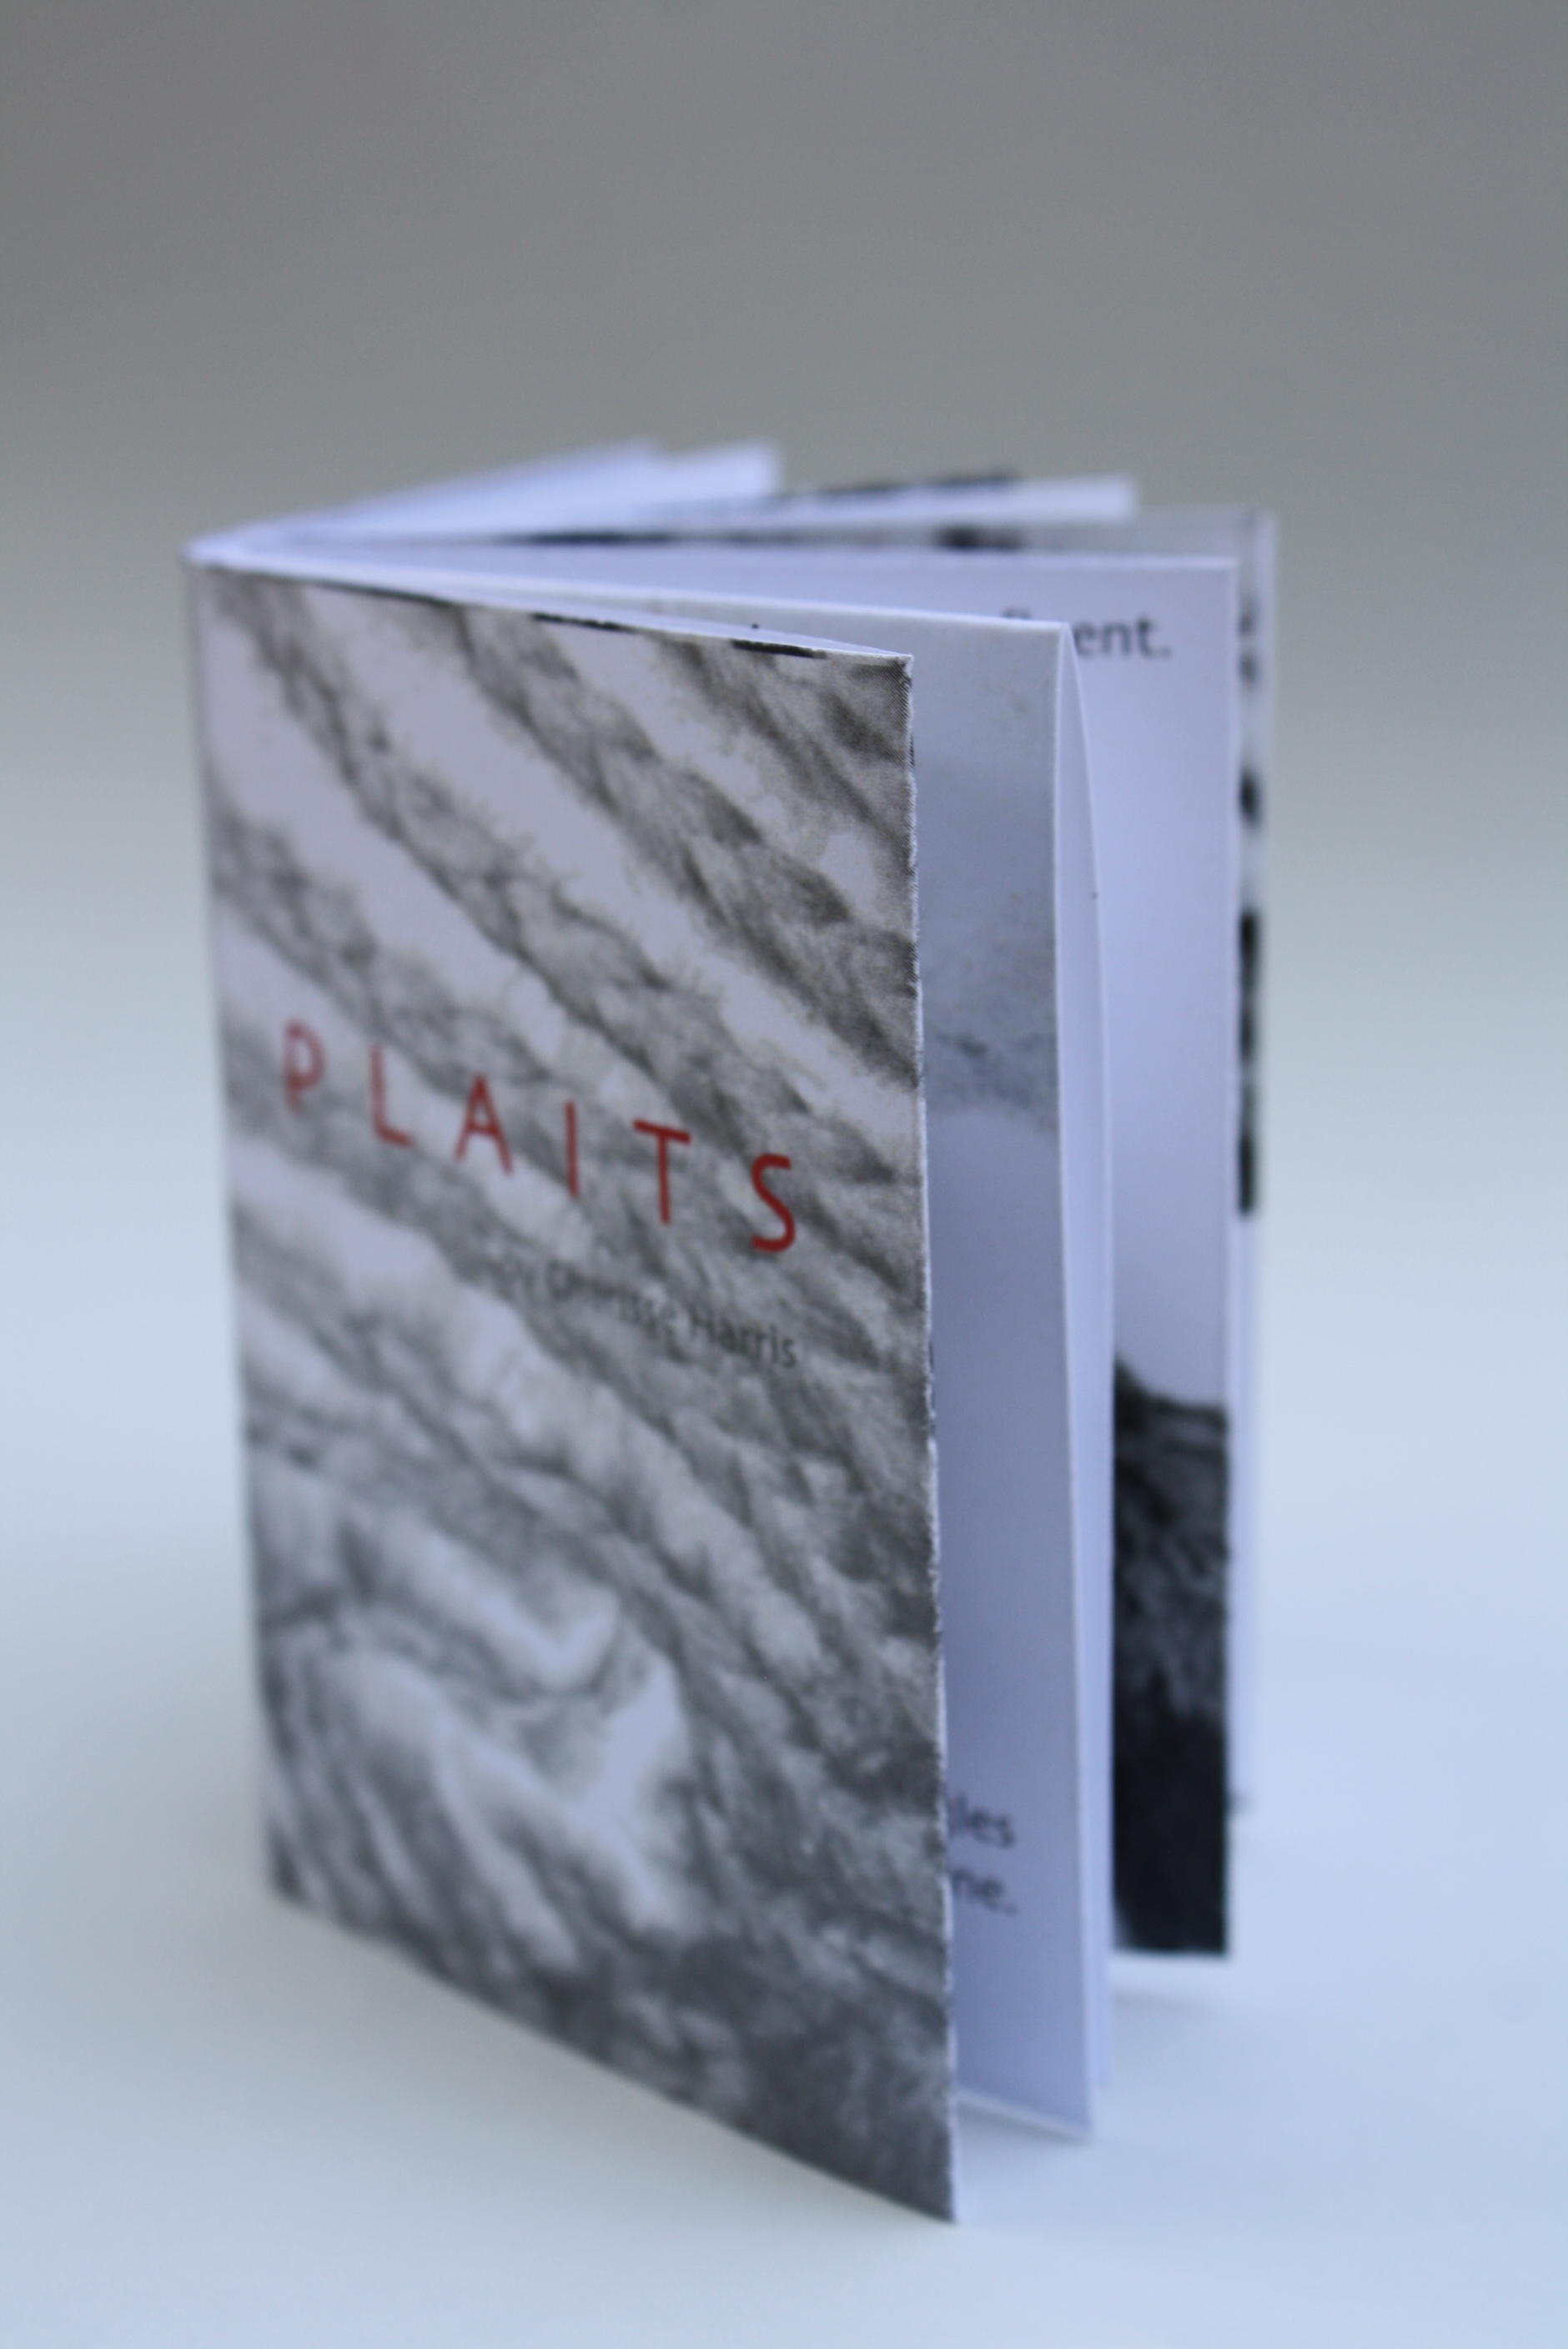 Miniature Book entitled "Plaits" 